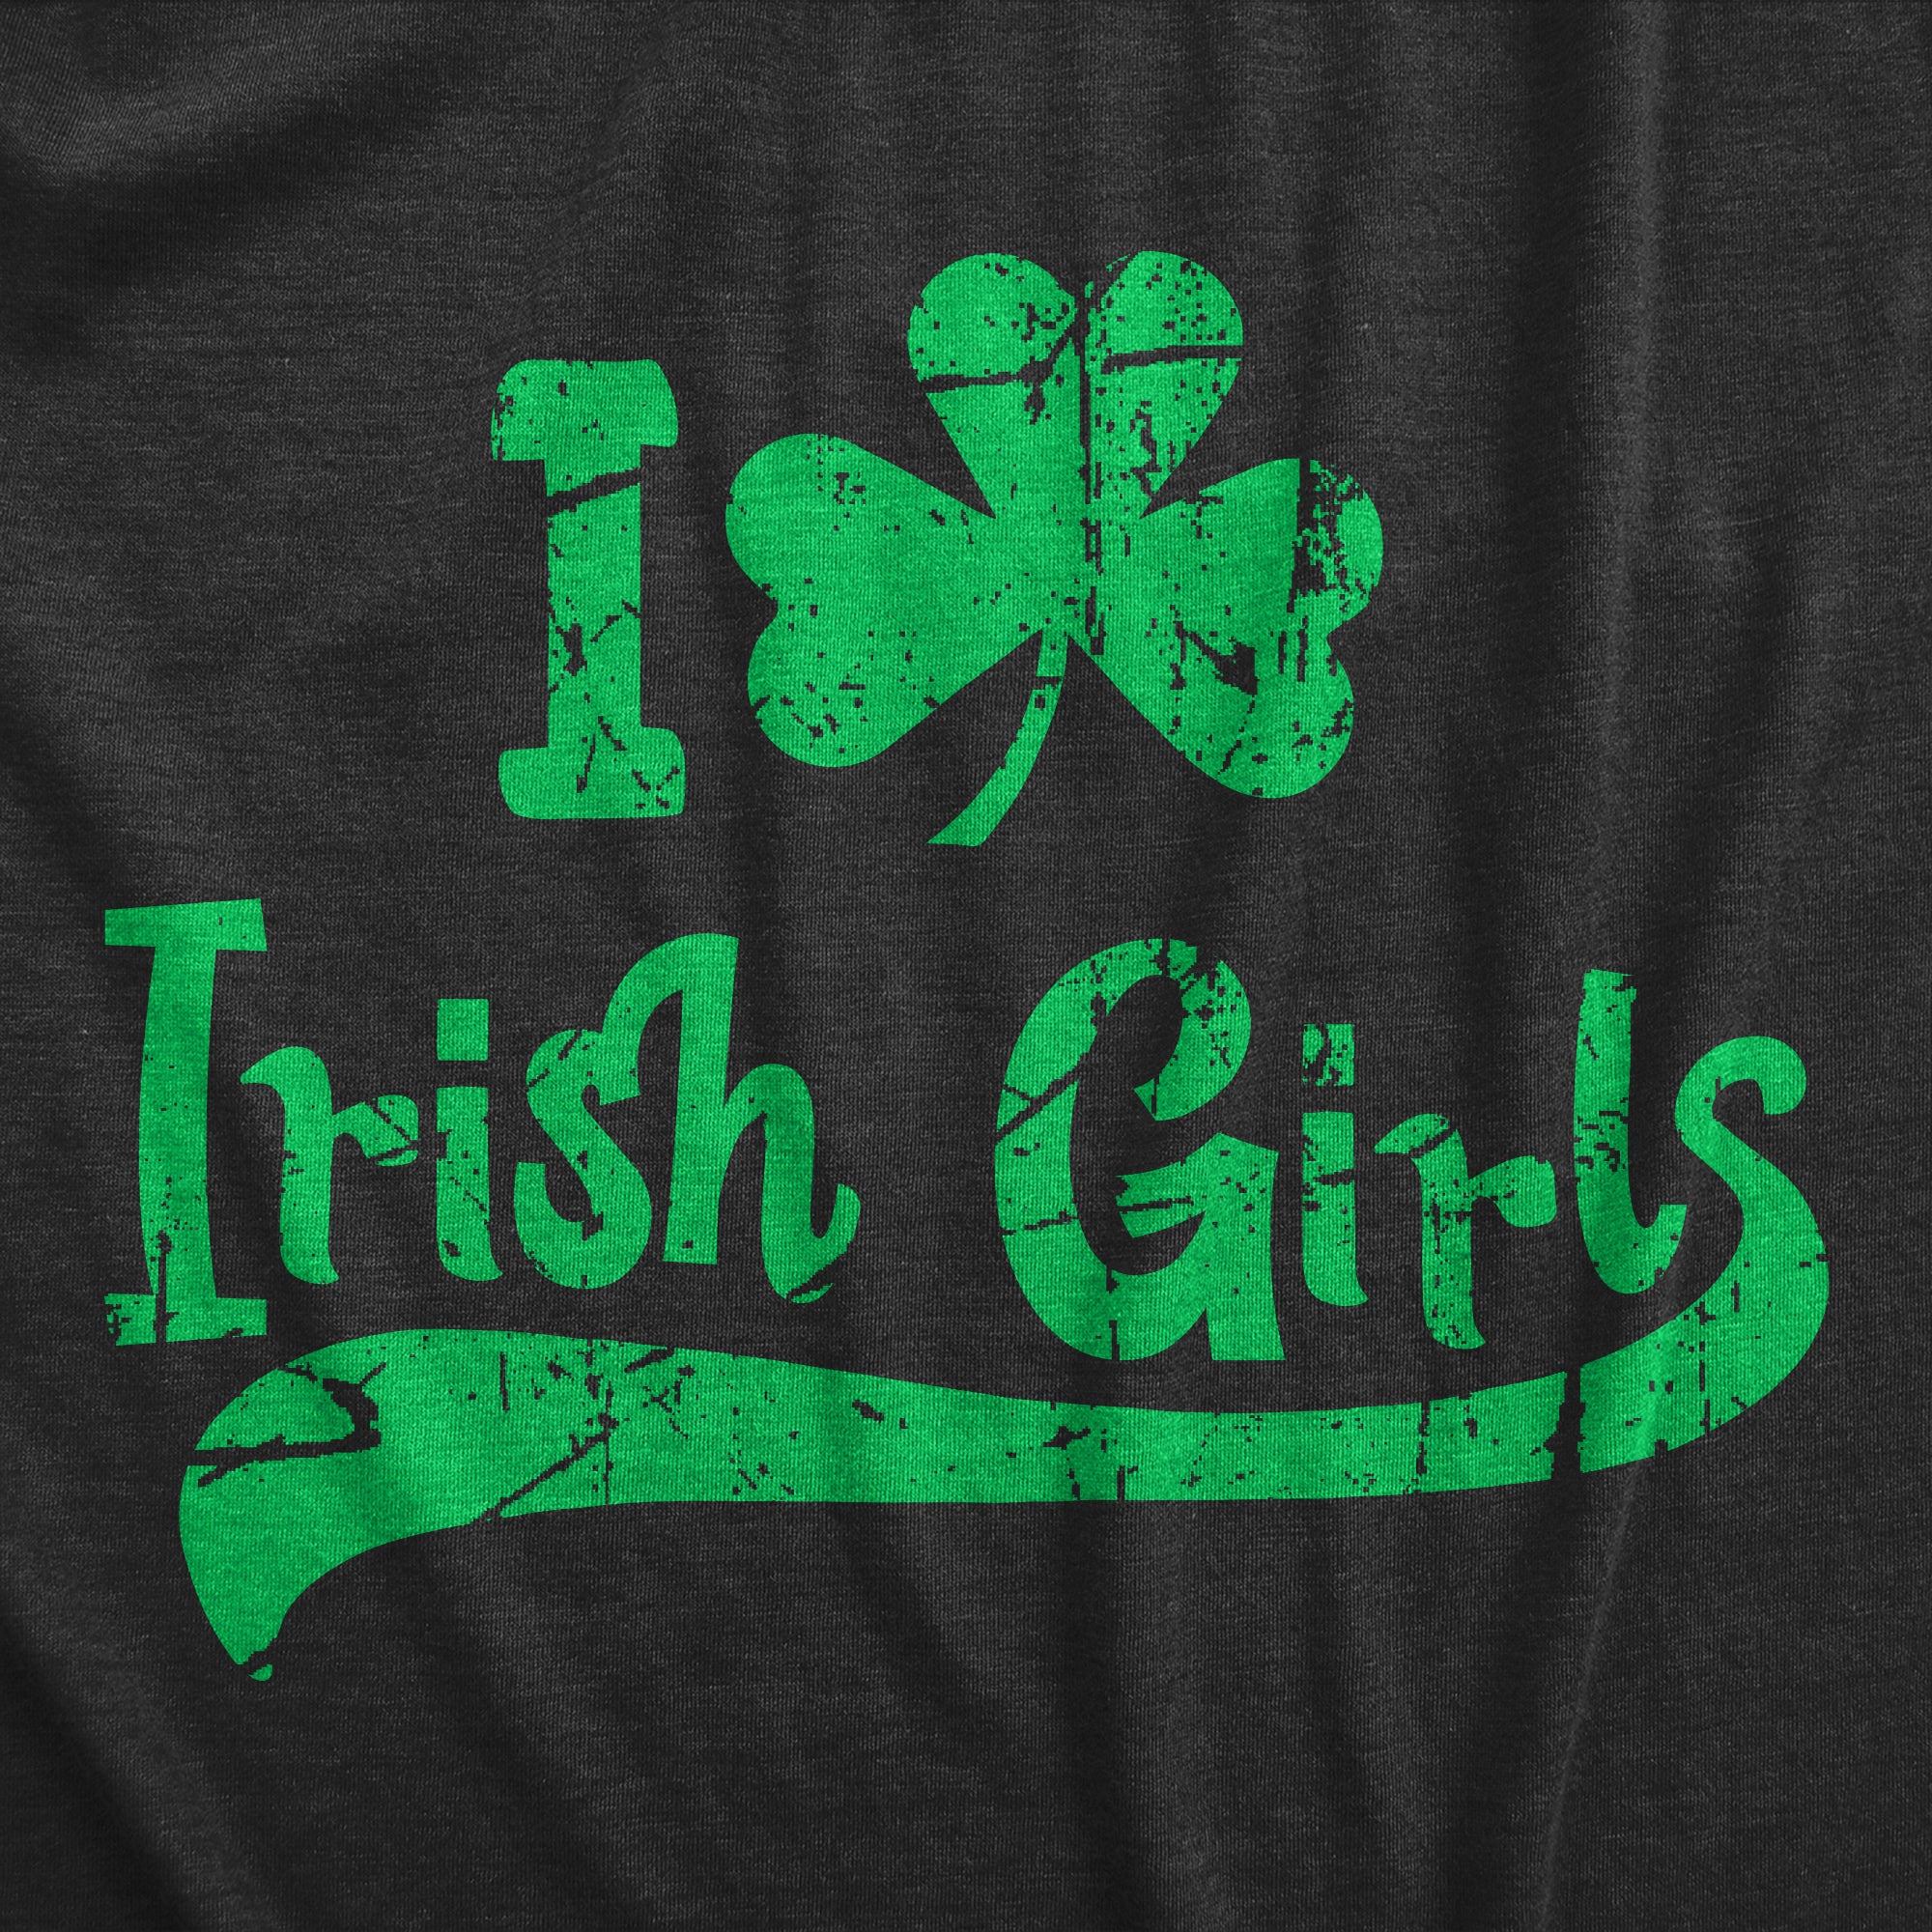 Funny Heather Black I Clover Irish Girls Mens T Shirt Nerdy Saint Patrick's Day Tee